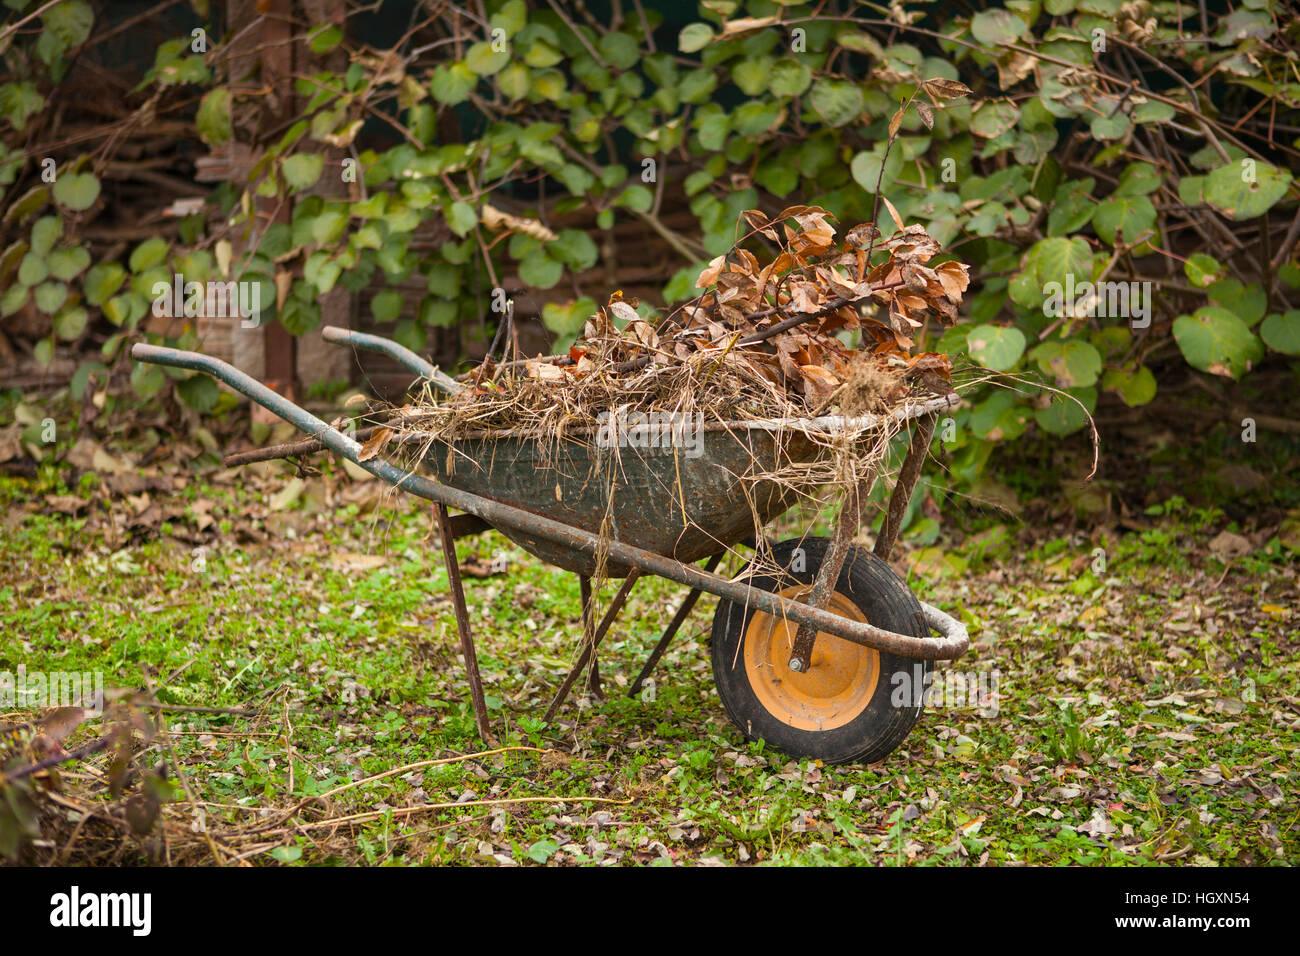 Old rusty wheelbarrow in a autumn garden Stock Photo